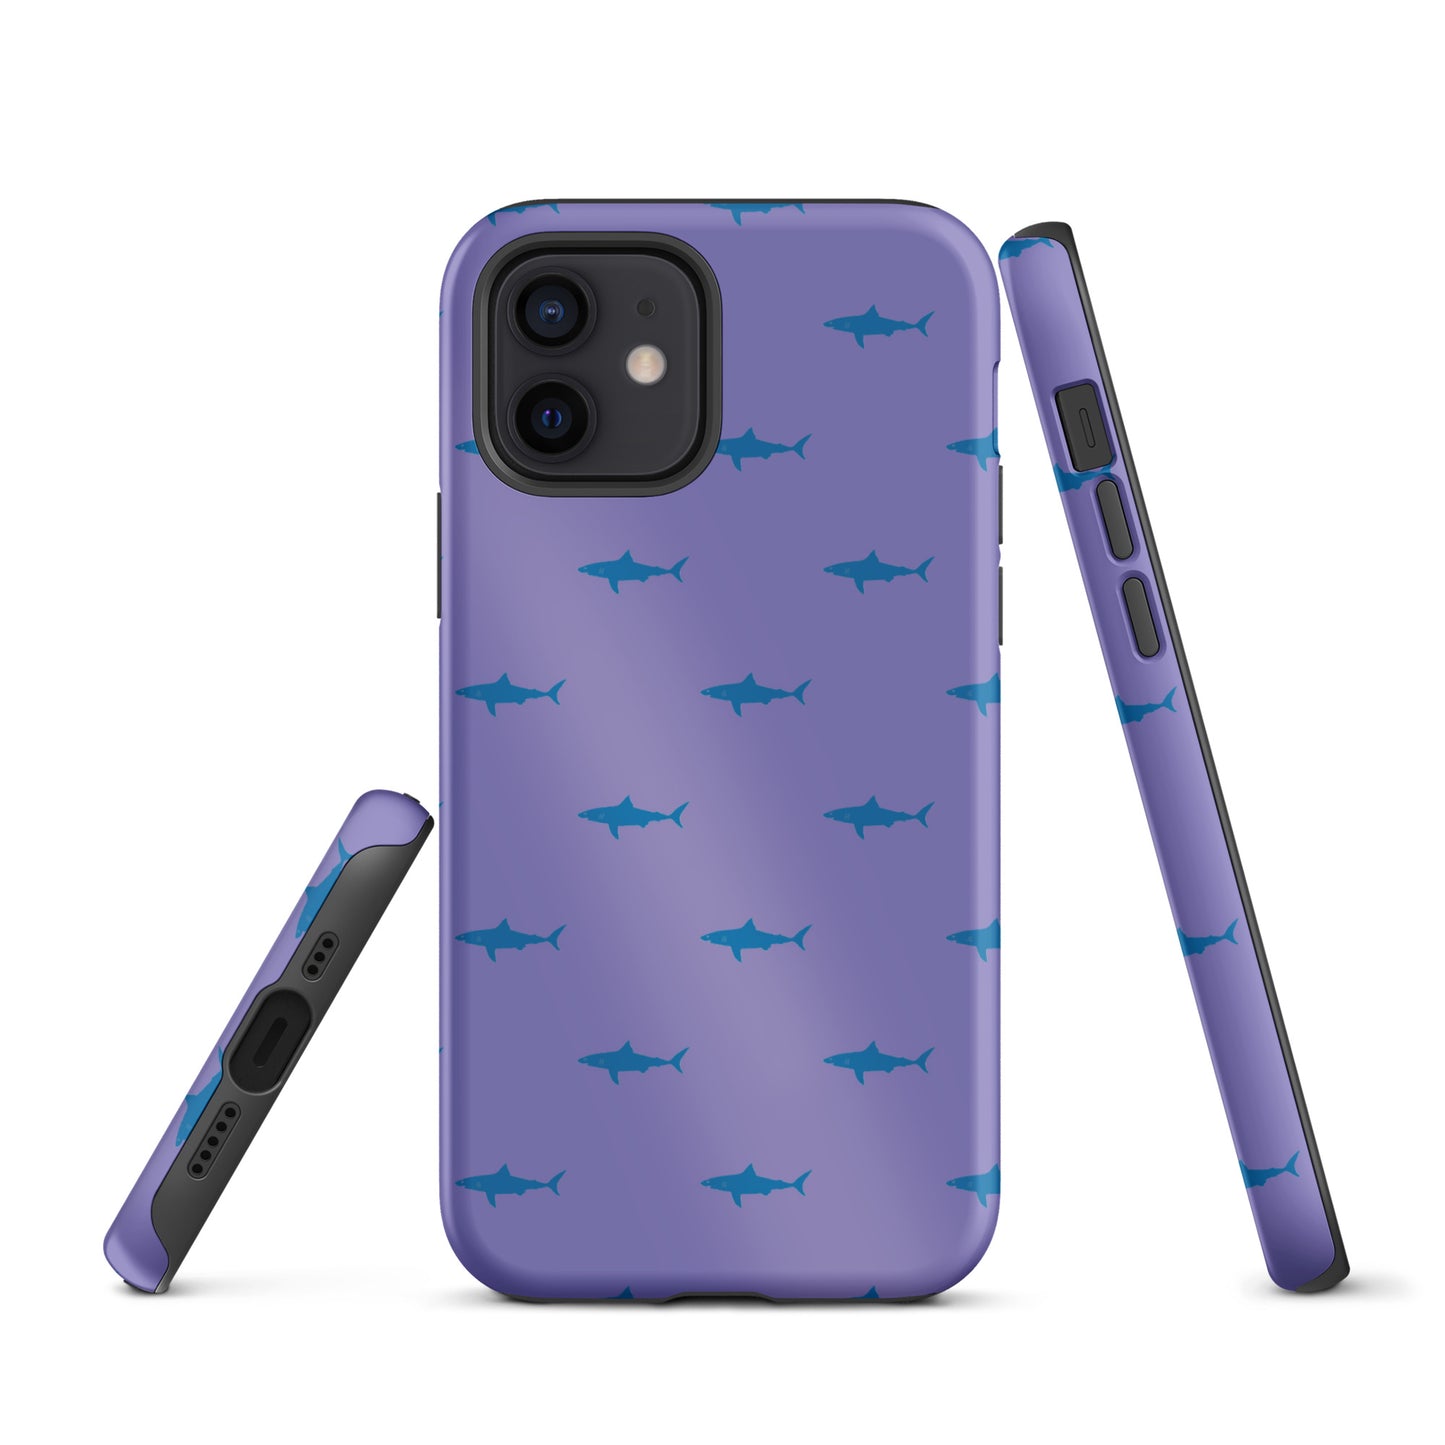 Shark iPhone Case - Blue on Purple